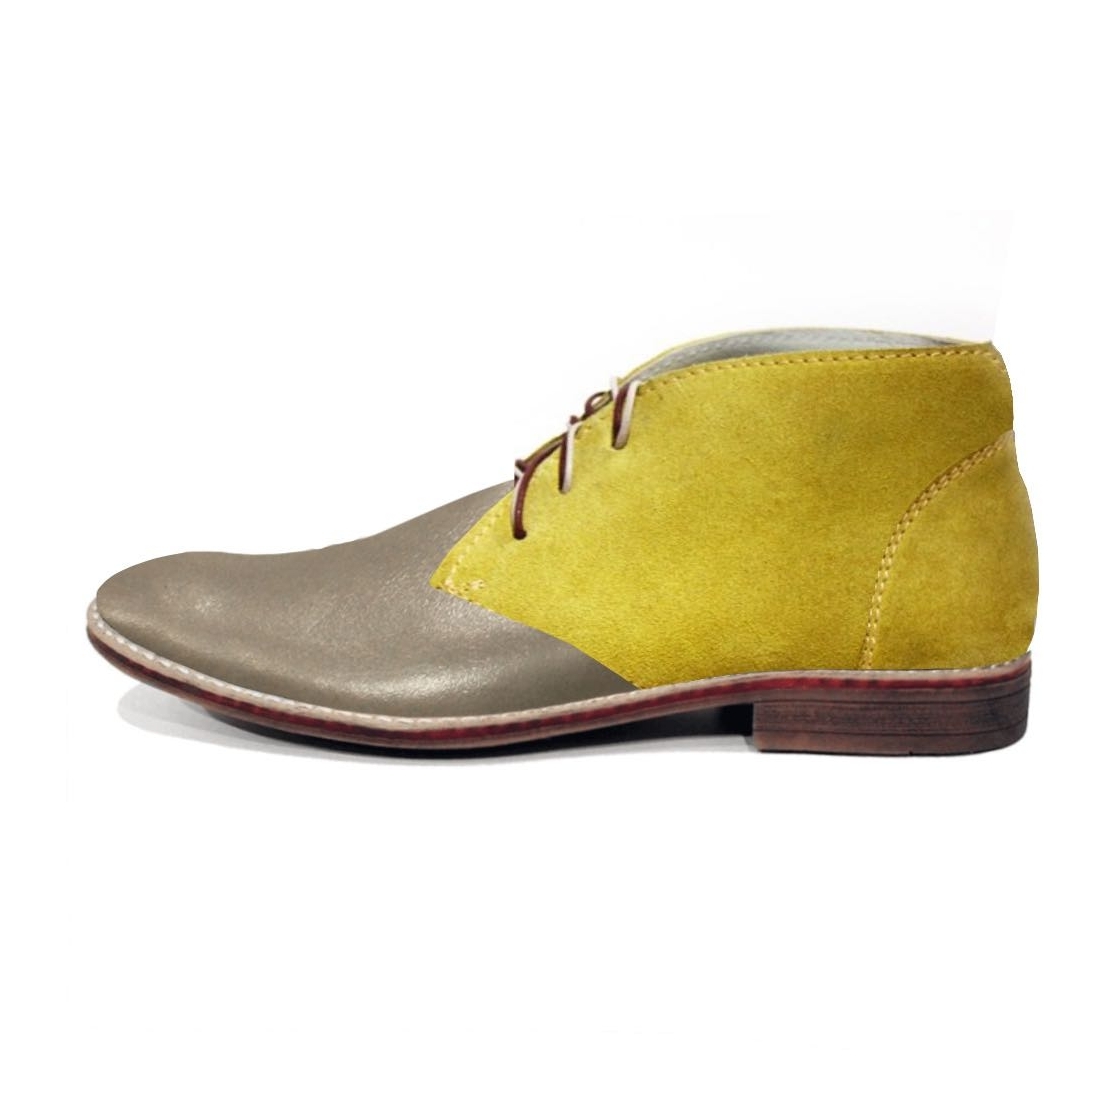 Modello Terrano - Desert Boots - Handmade Colorful Italian Leather Shoes